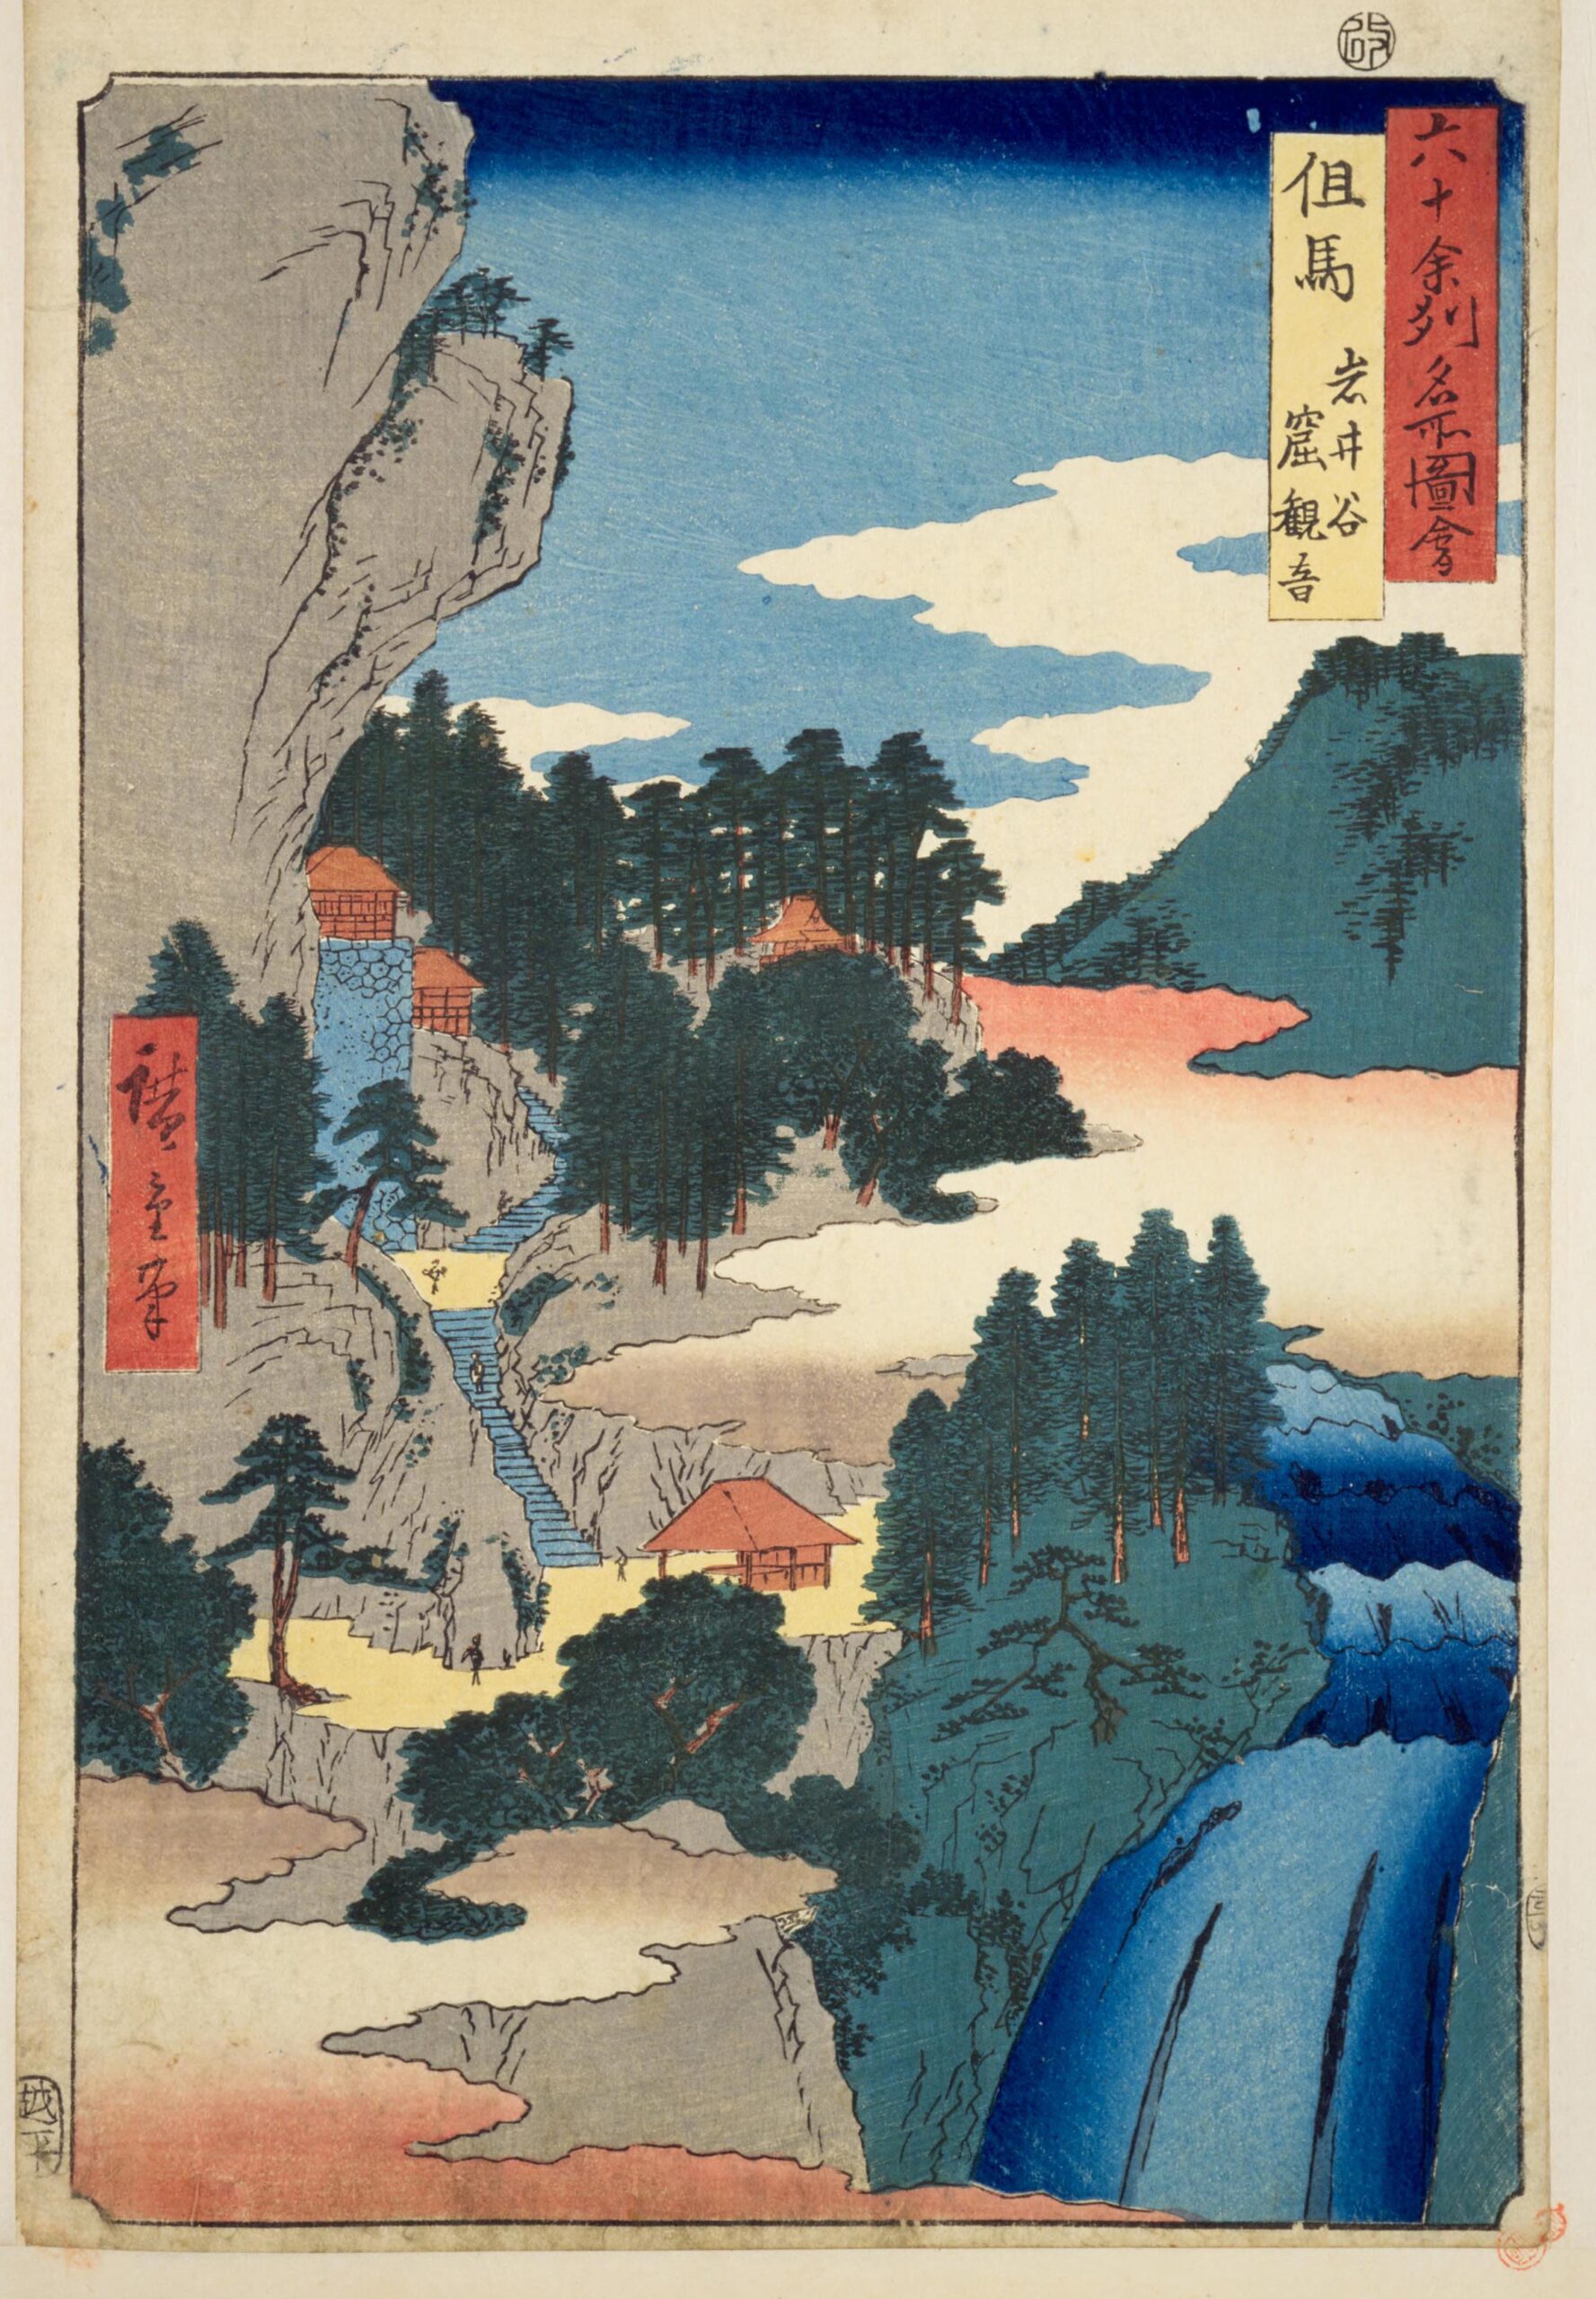 Hiroshiges - 39 Tajima Province: Iwai Valley, Kannon Cave (Tajima, Iwaidani, Iwayakannon) - Pictures of Famous Places in the Sixty-odd Provinces